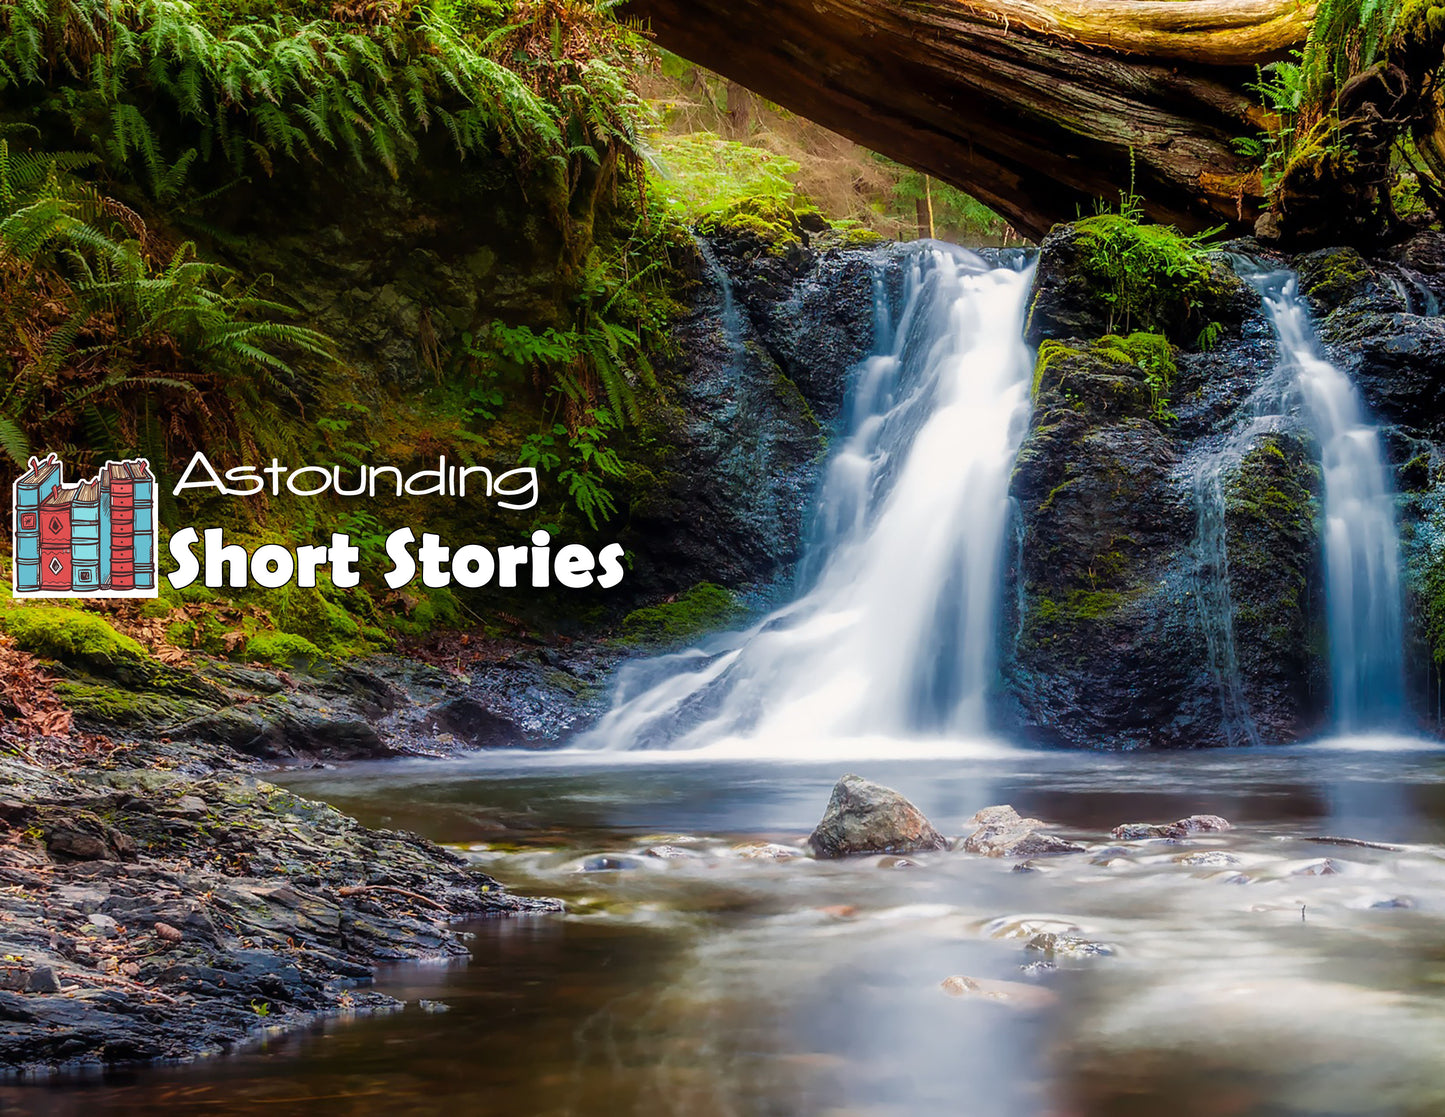 Astounding Short Stories